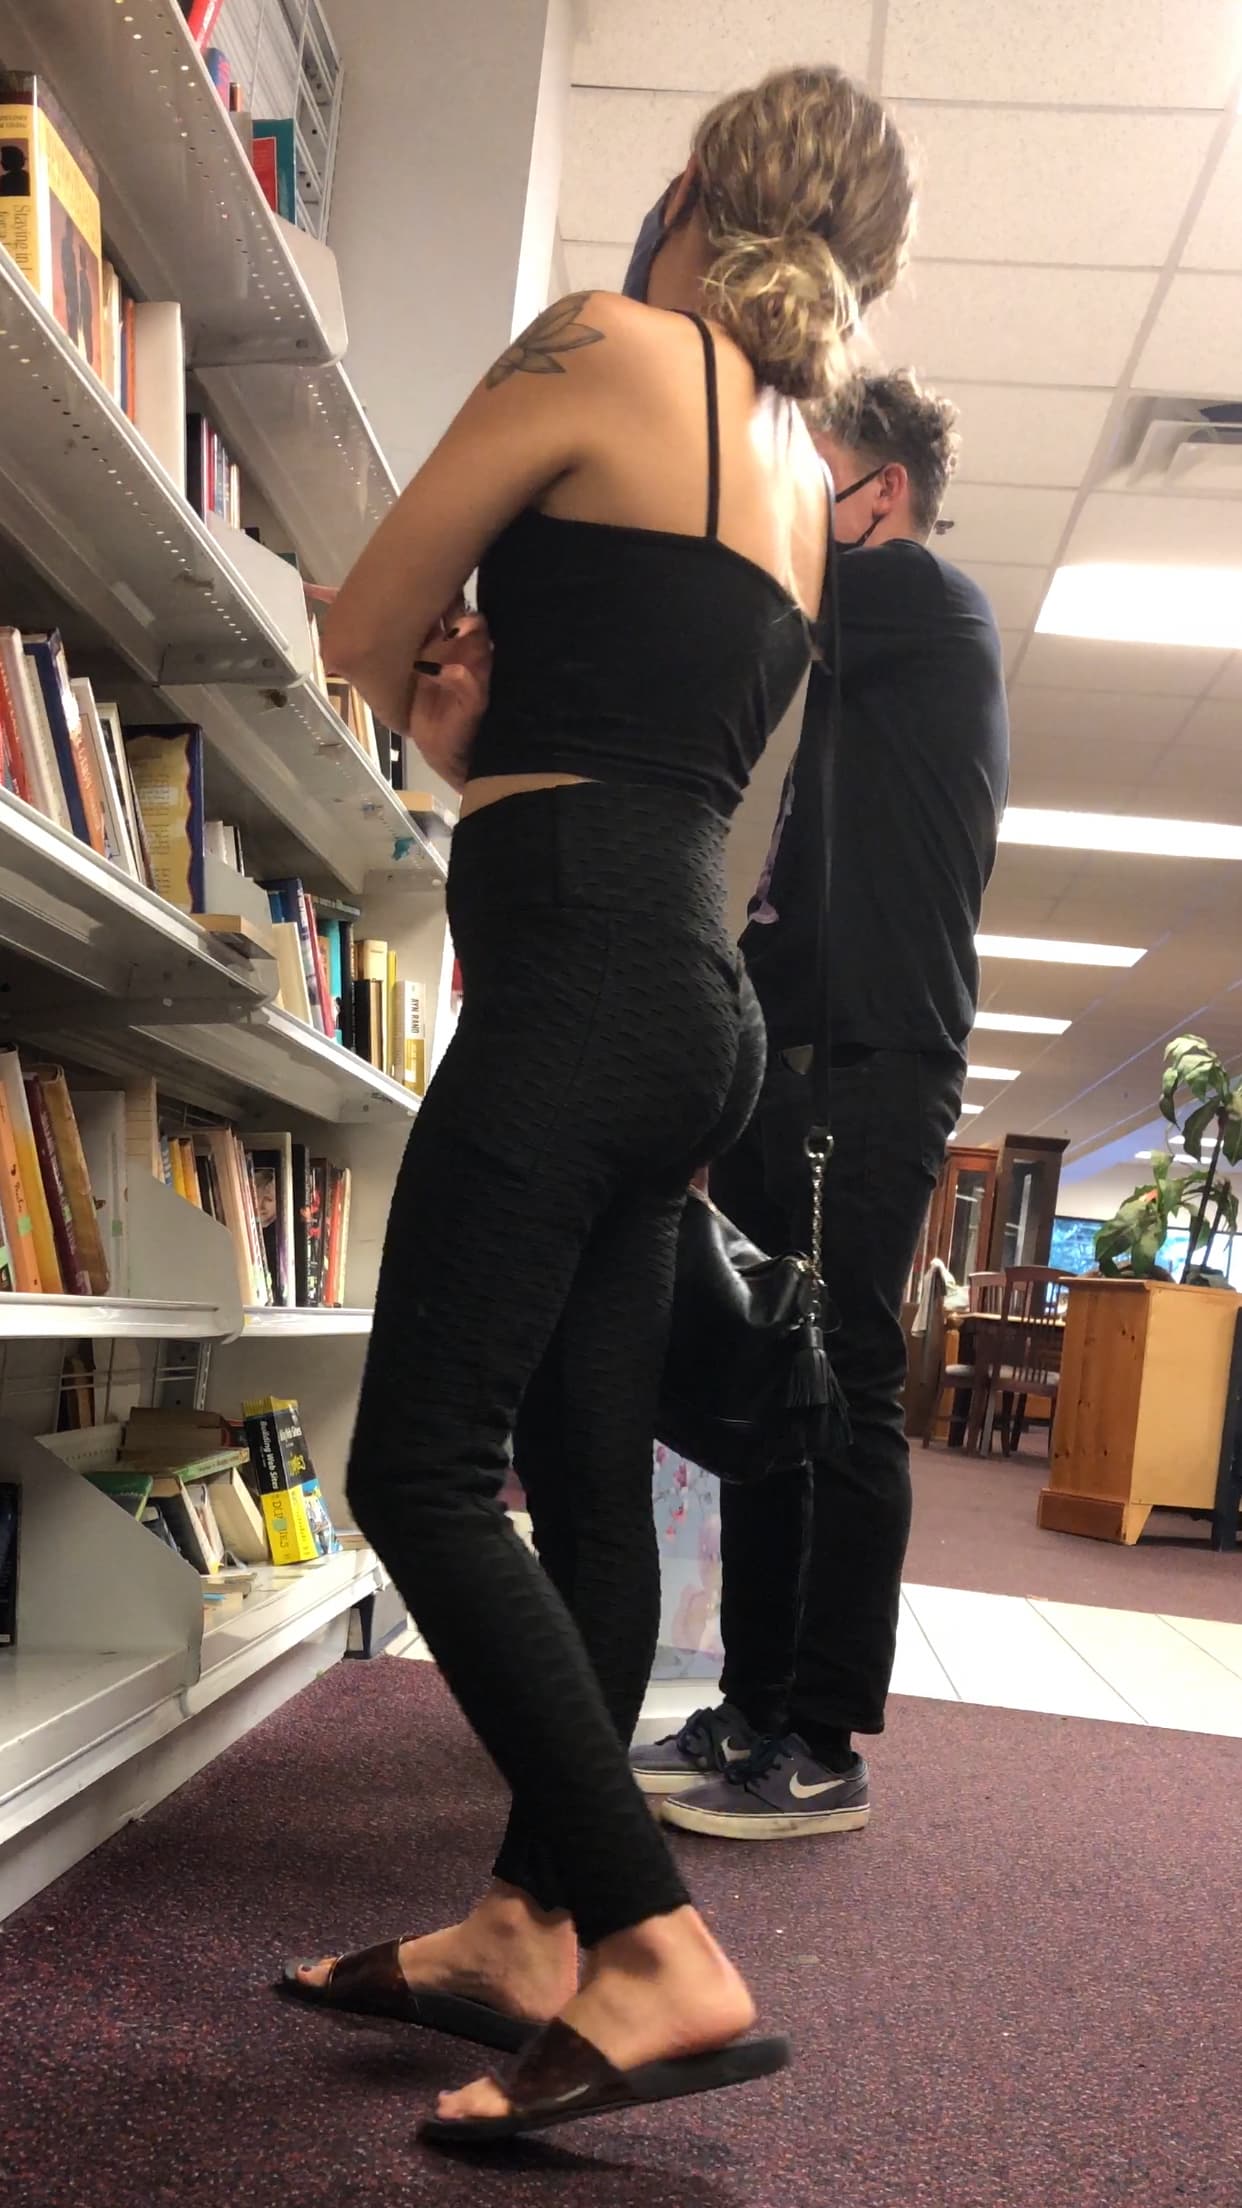 Bookworm booty with pierced n1ps - Spandex, Leggings & Yoga Pants - Forum